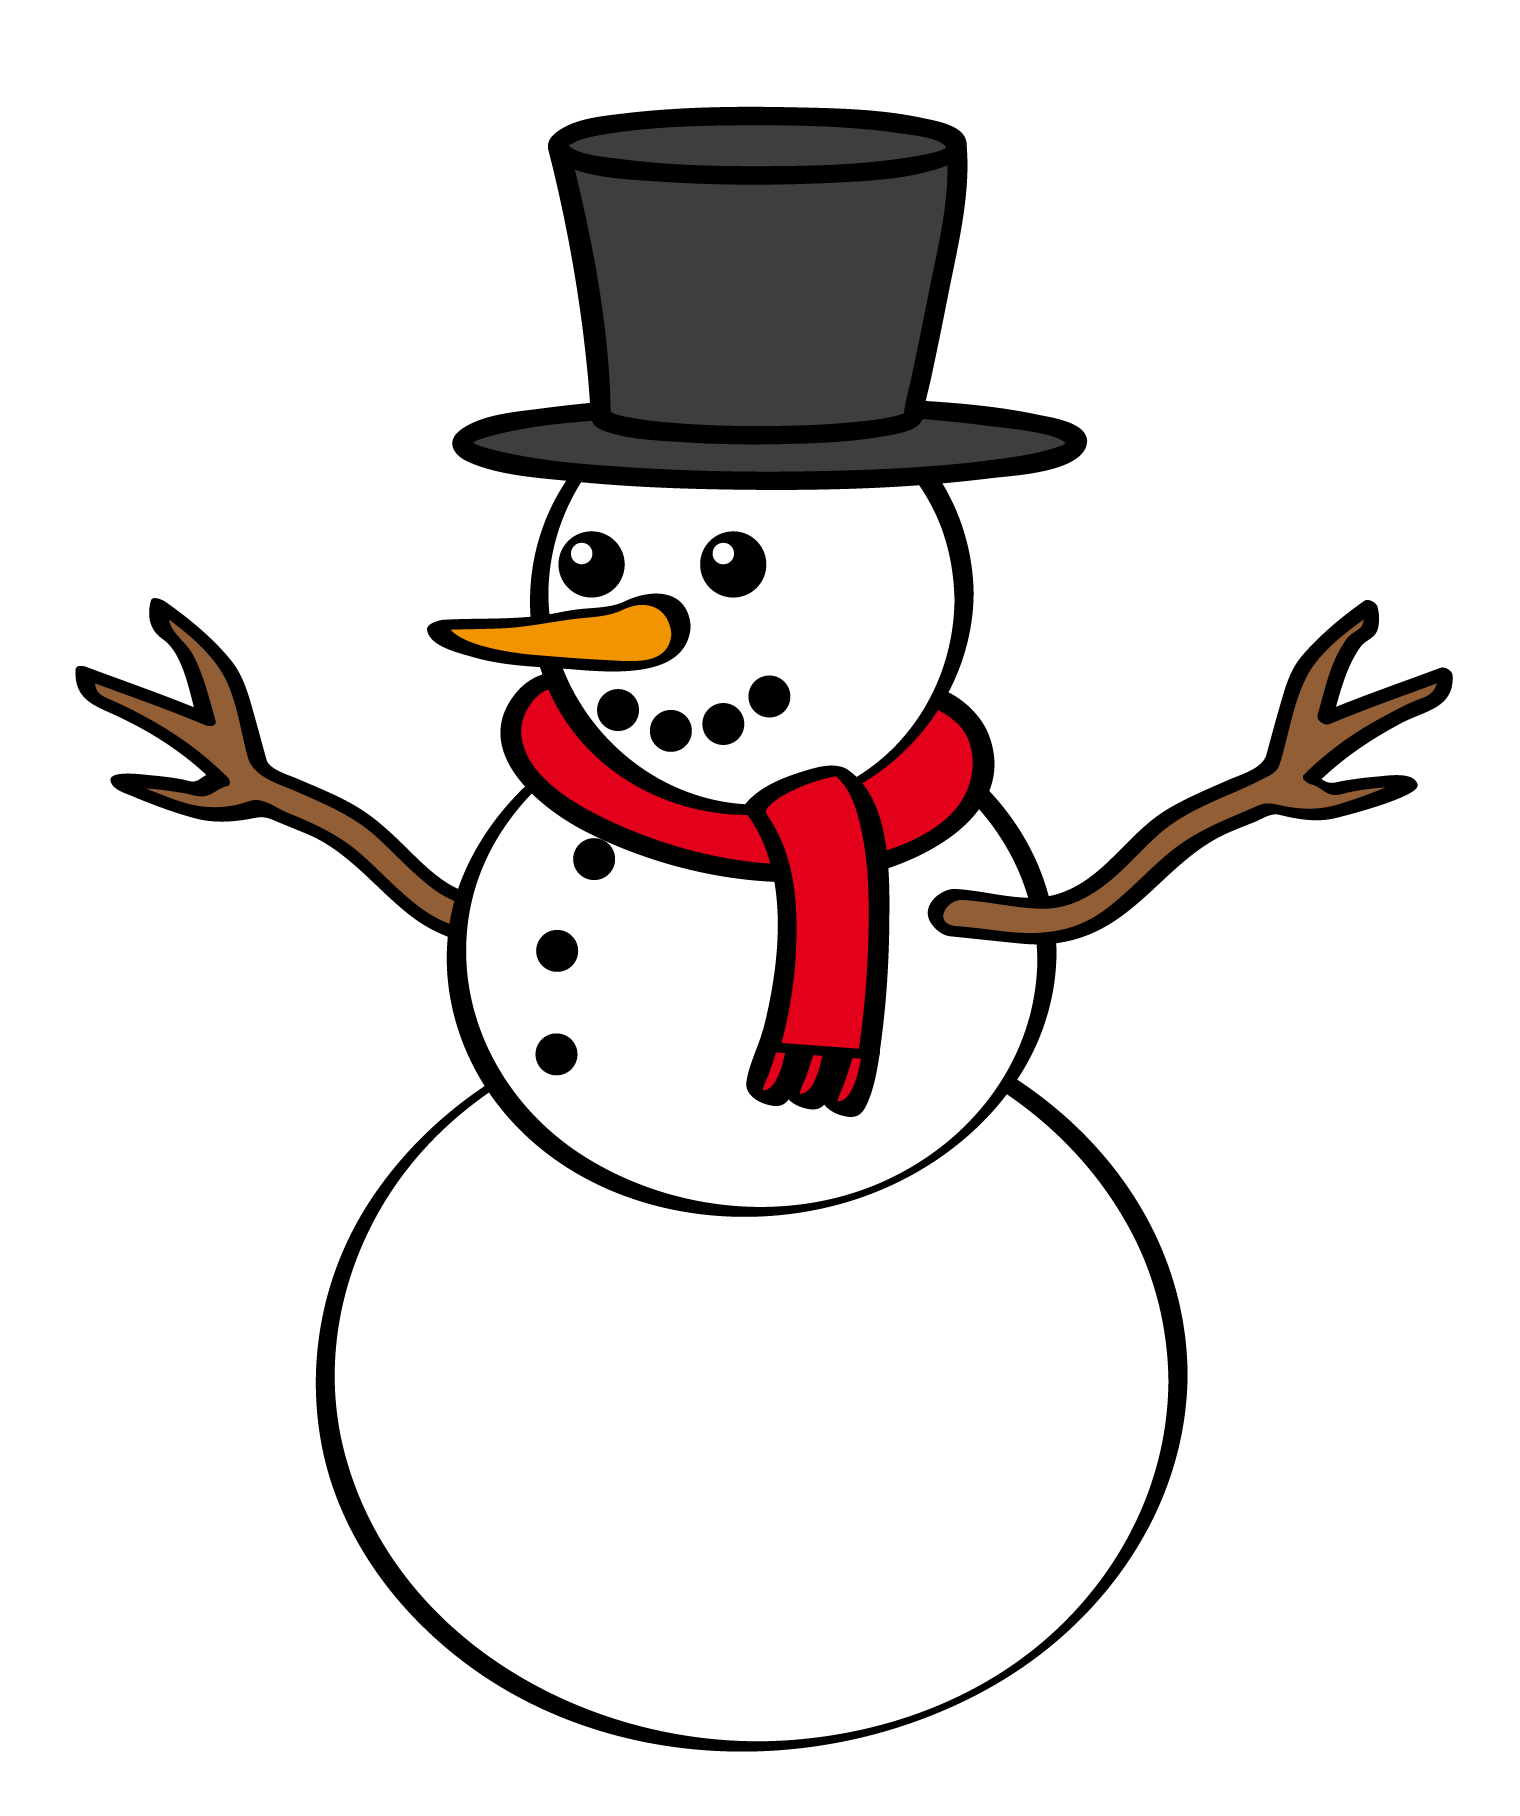 Free Snowman Images, Download Free Clip Art, Free Clip Art